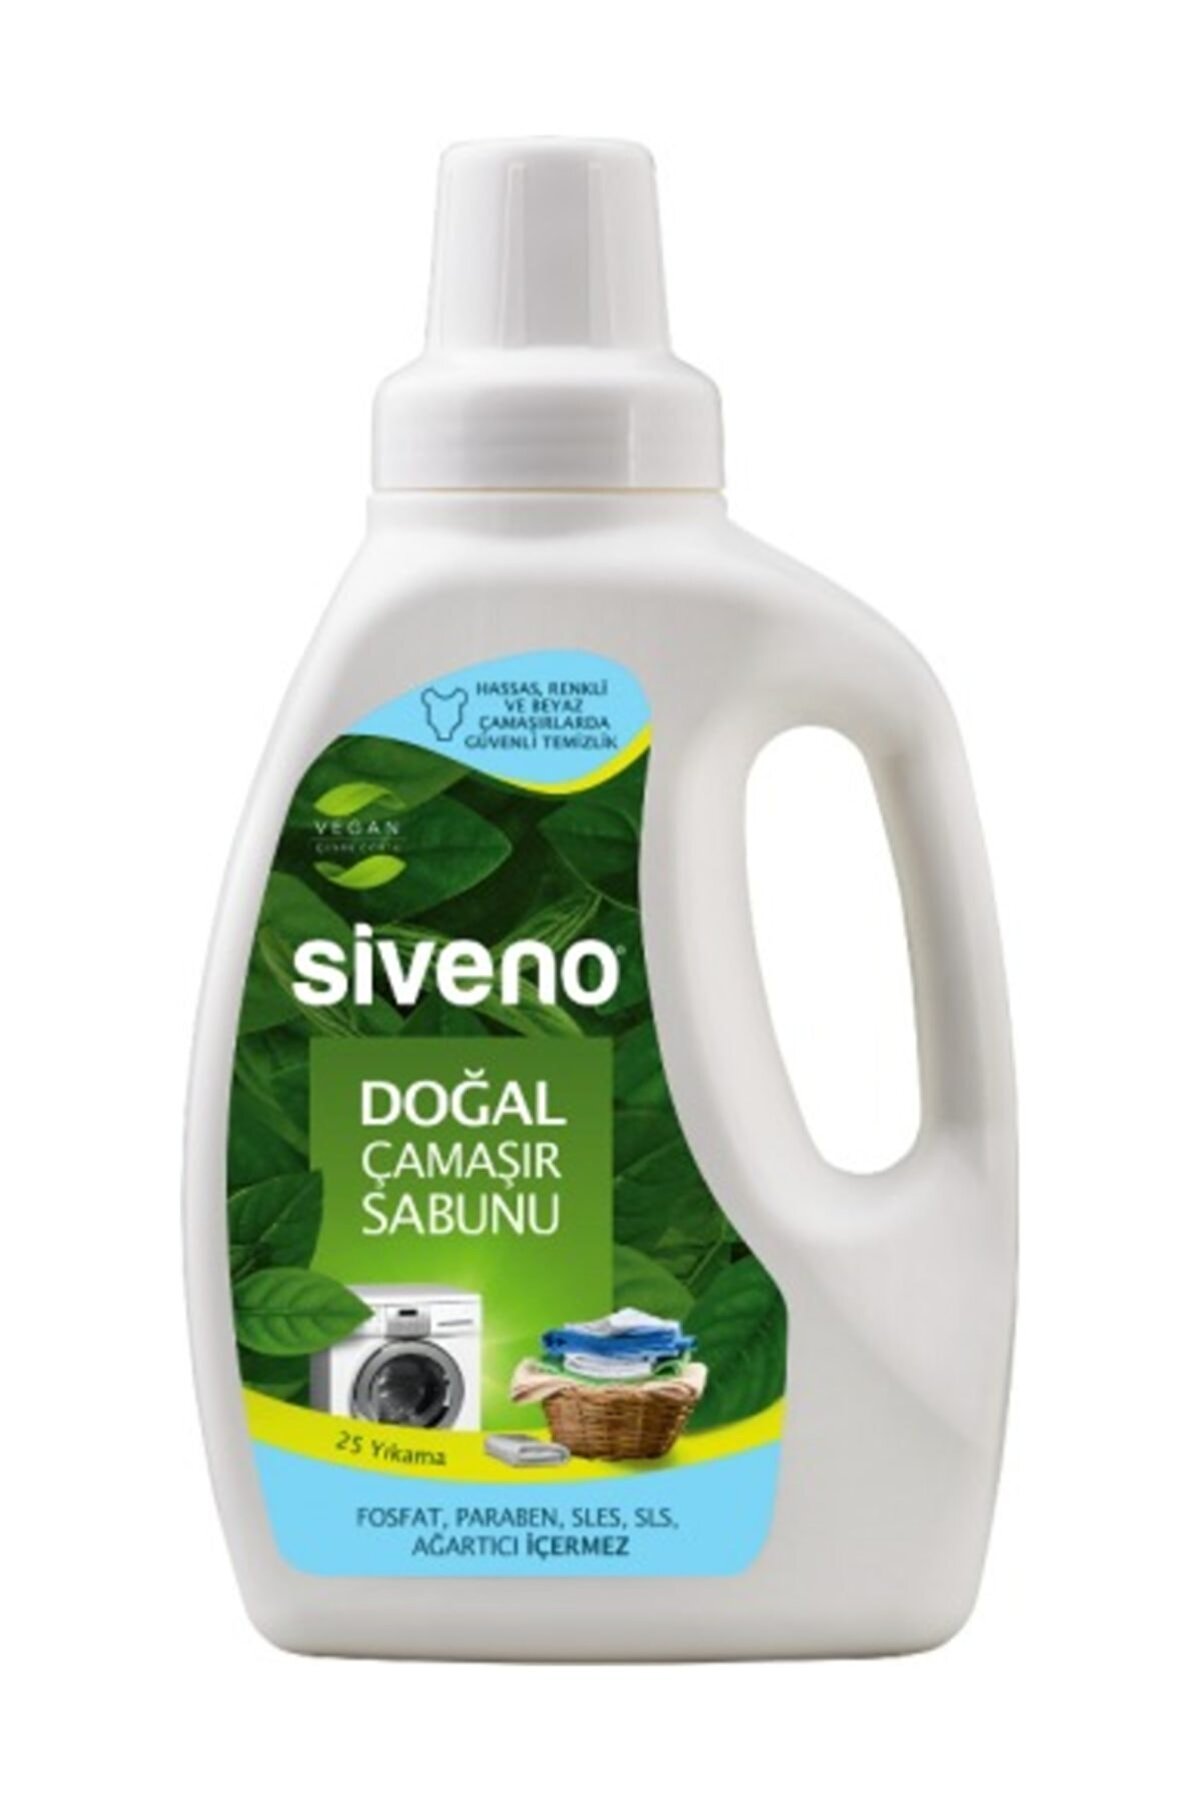 Siveno Doğal Çamaşır Sabunu Vegan 750 ml